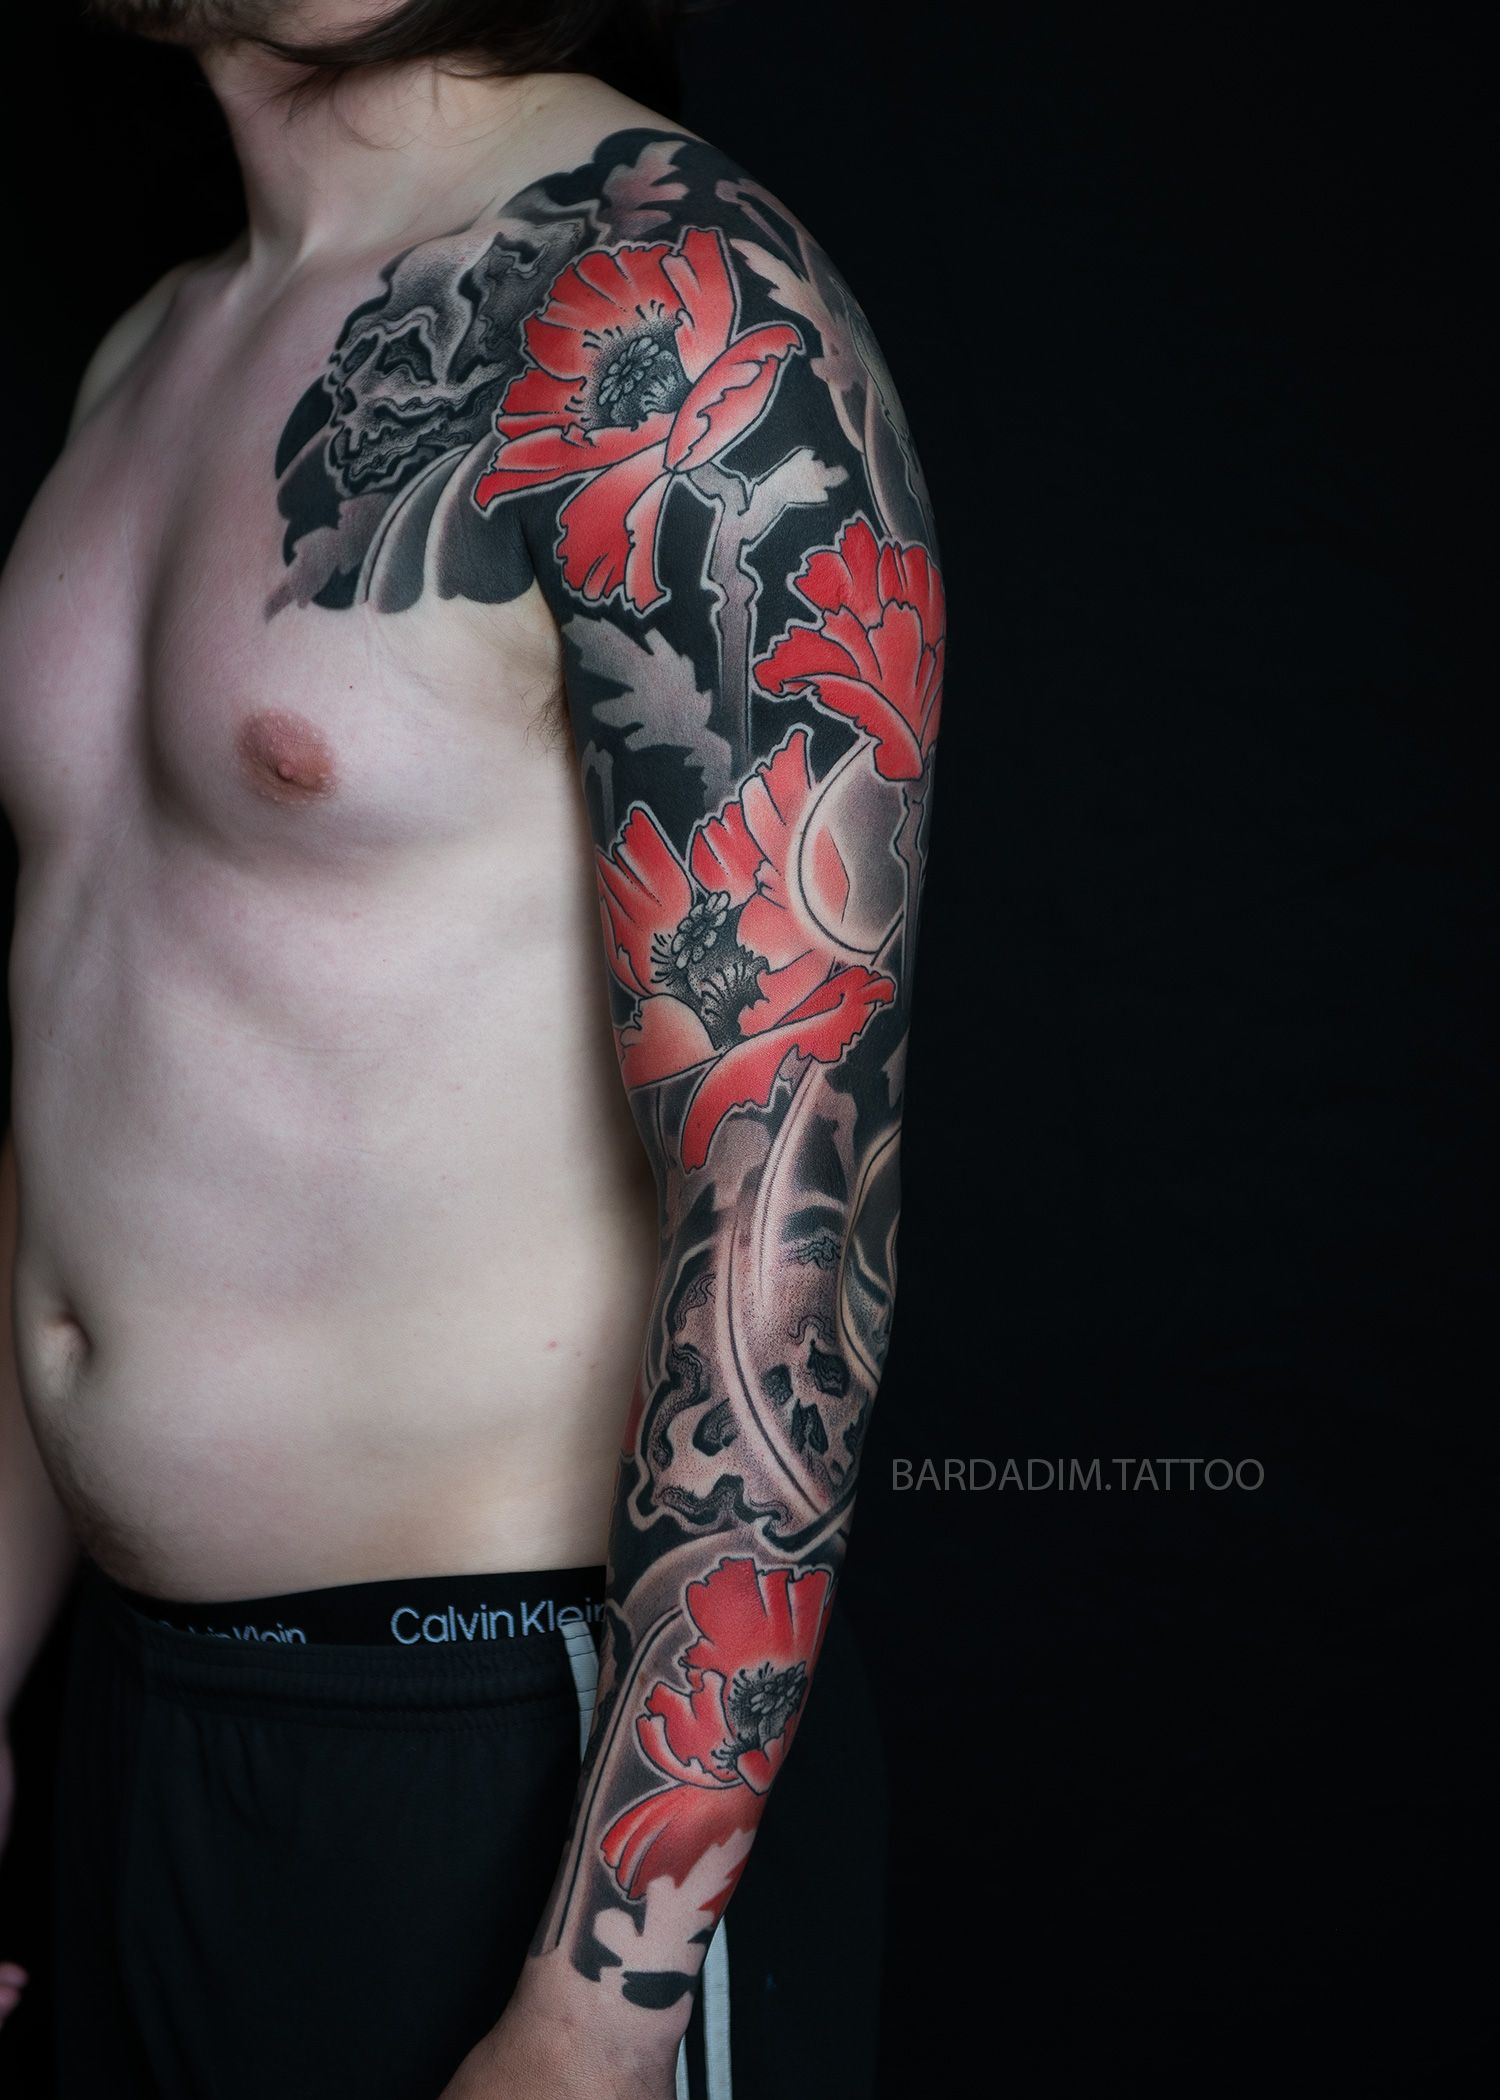 Poppy Flowers and Skull-Looking Rocks tattoo sleeve. Bardadim Tattoo, NYC.